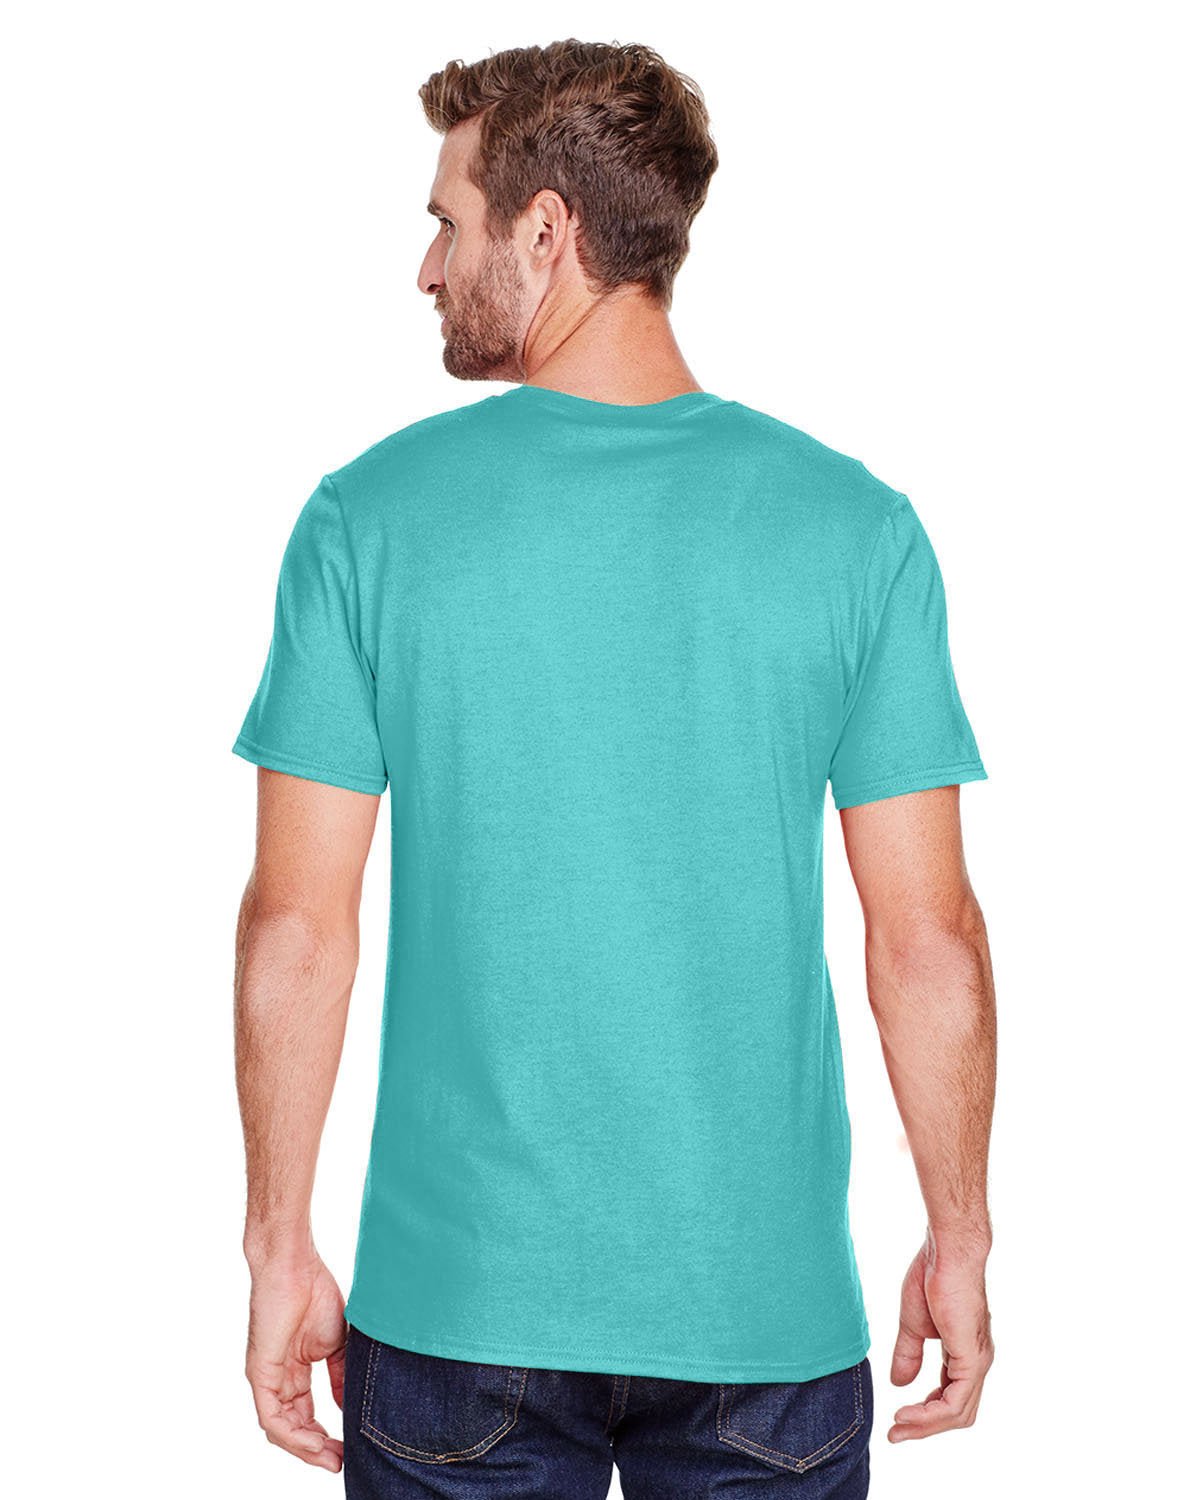 560MR-Jerzees-SCUBA BLUE-Jerzees-T-Shirts-2